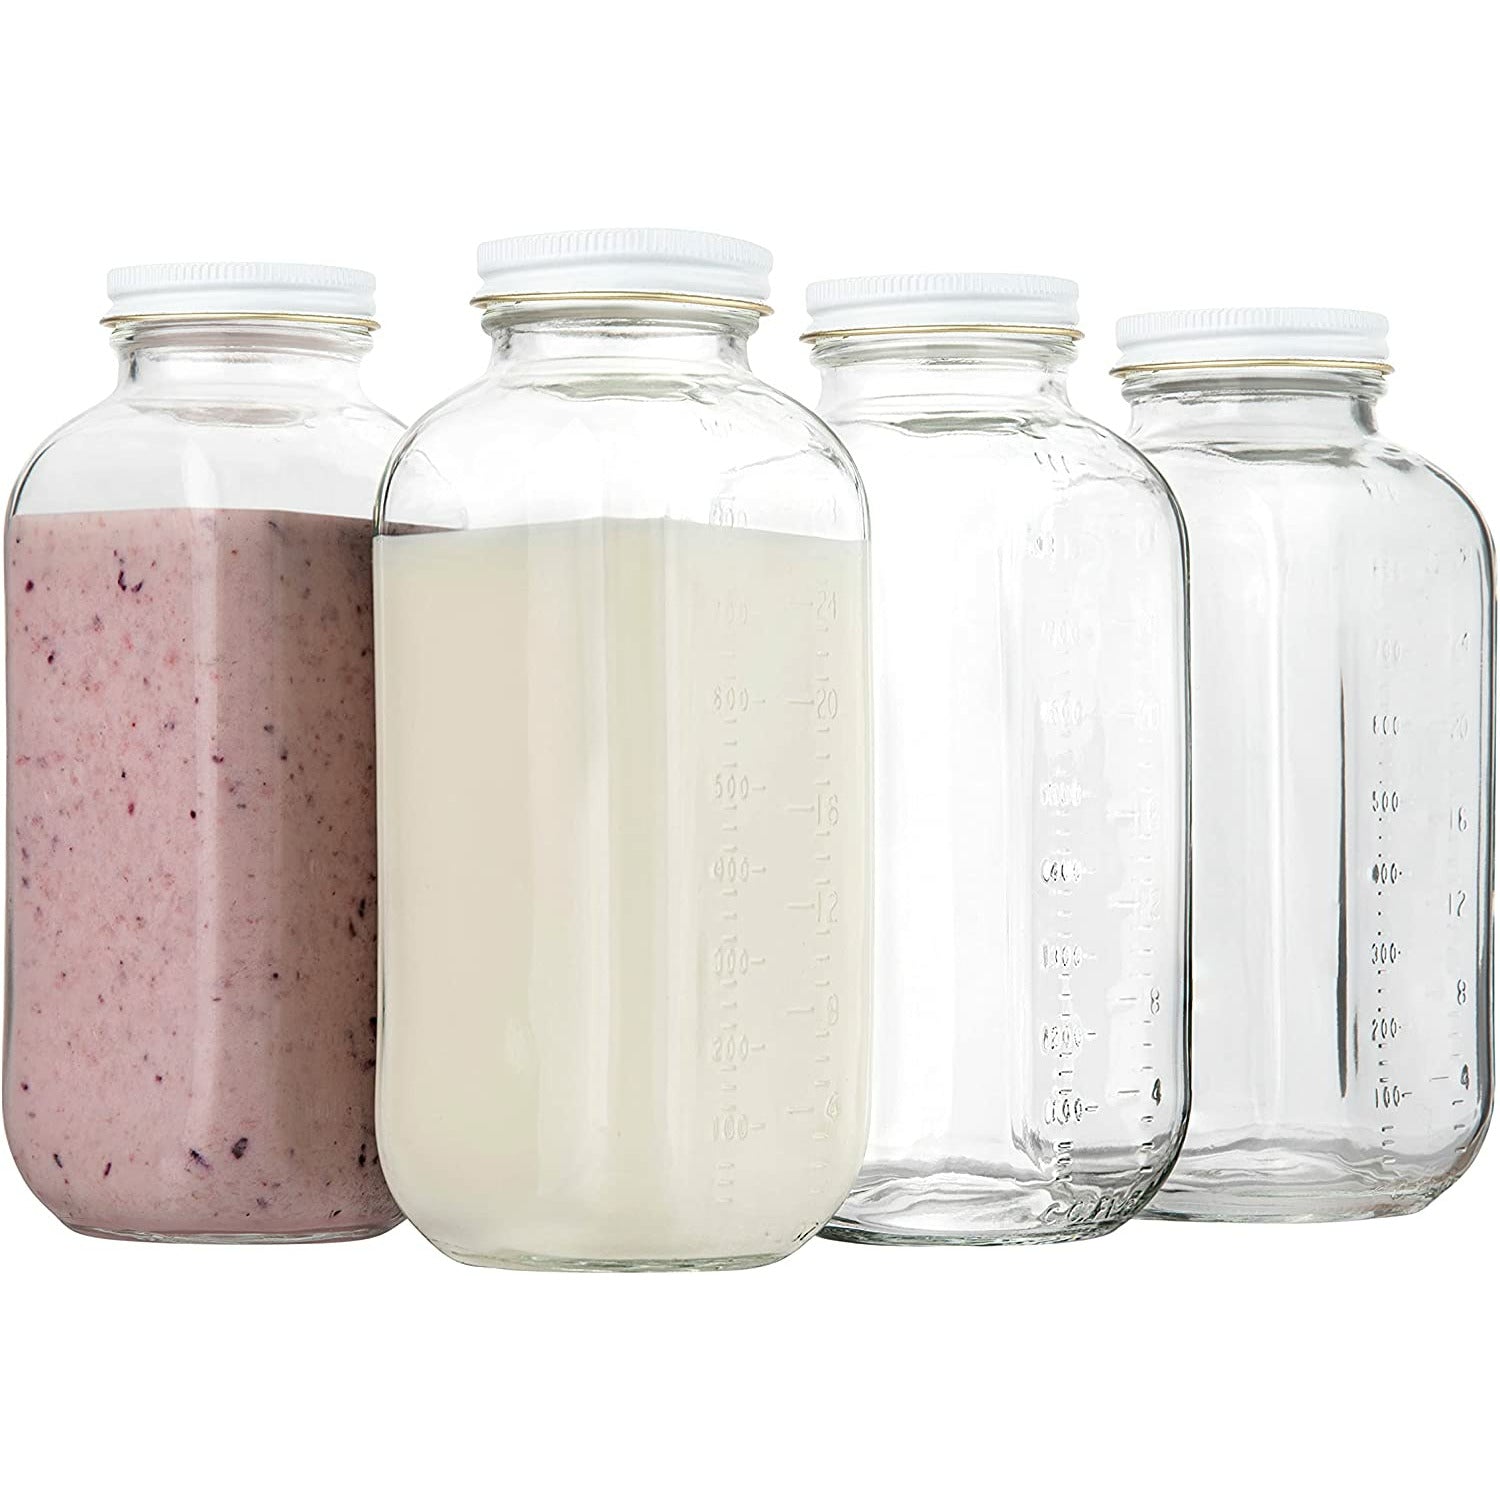 Kitchentoolz 64 Oz Glass Milk Bottle with Lids, Half Gallon Milk